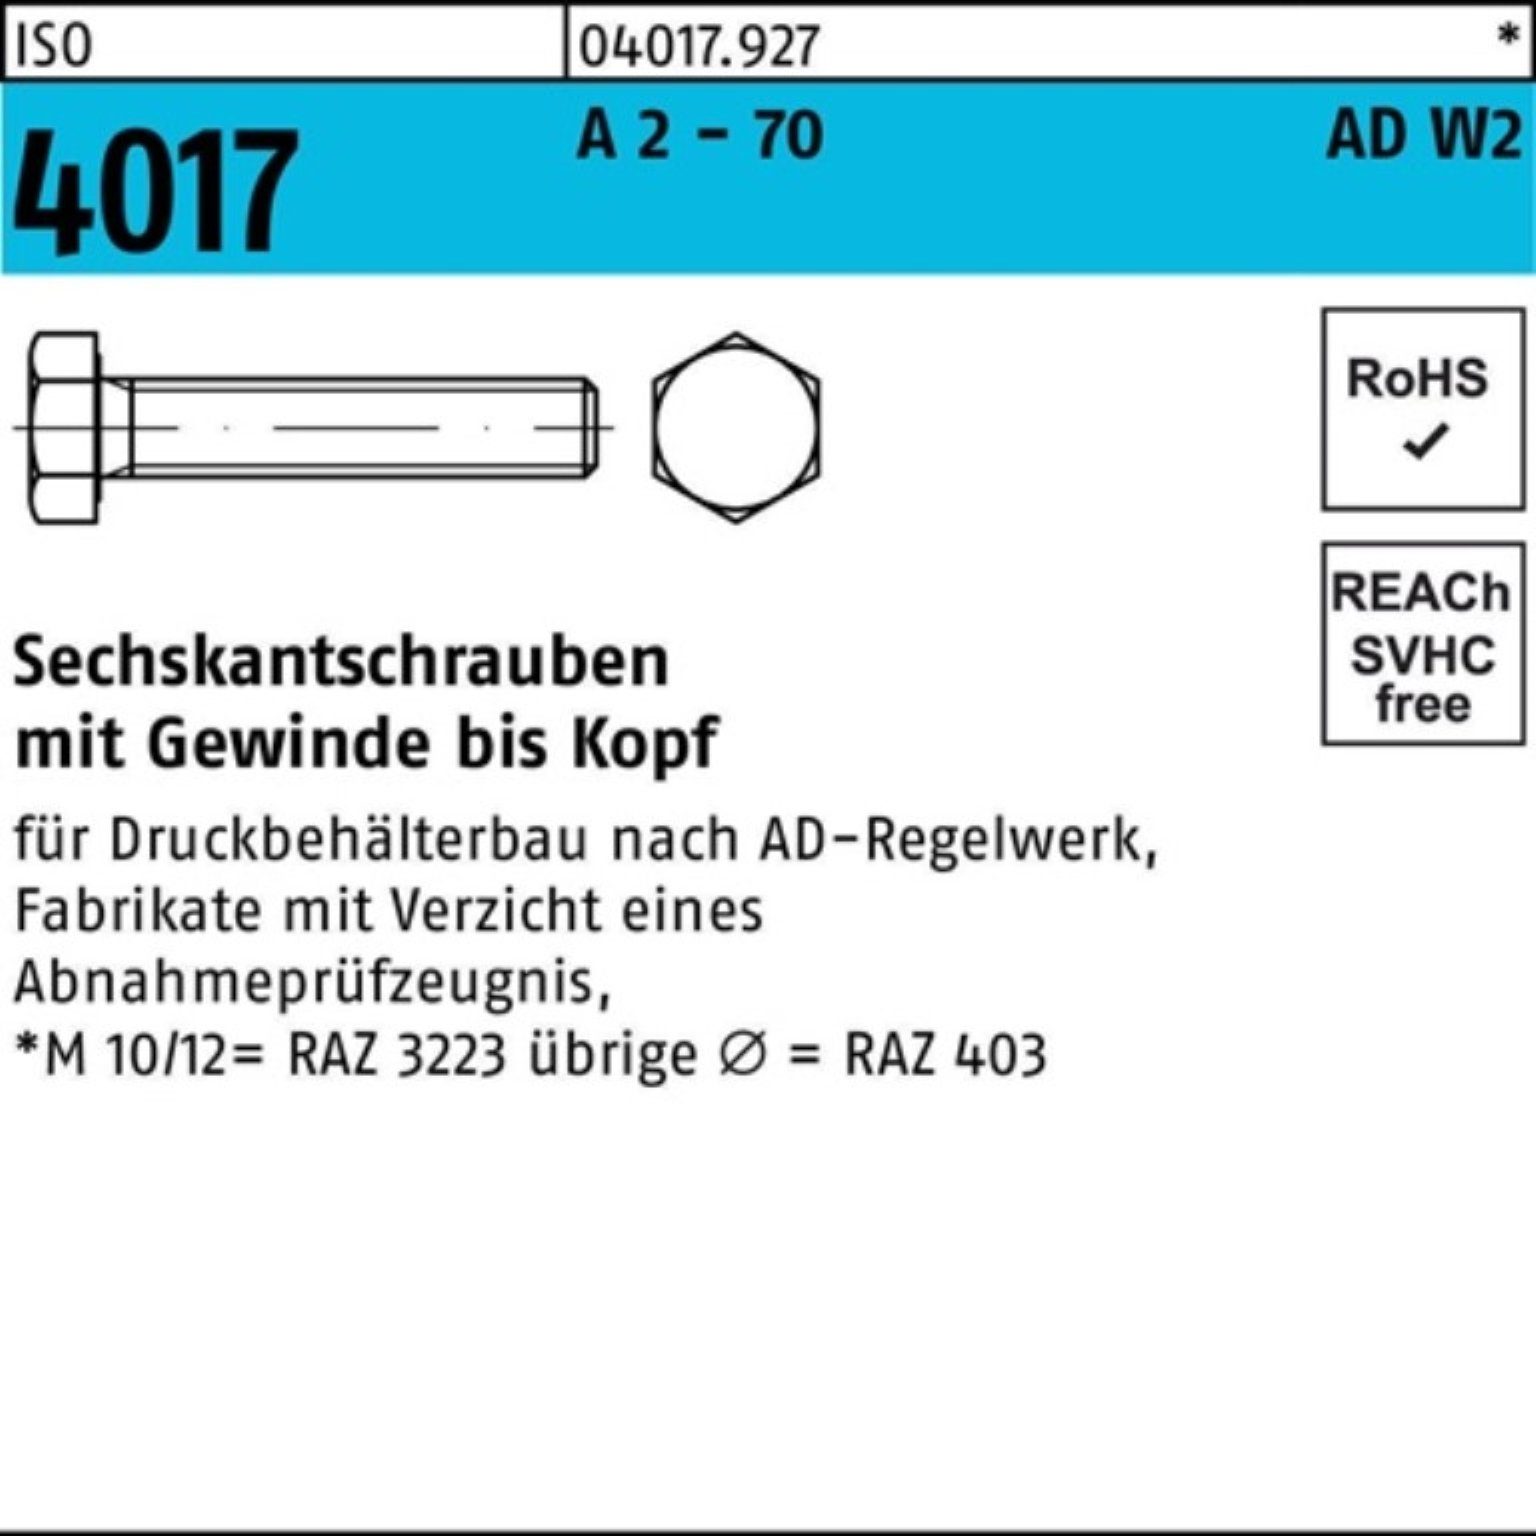 Bufab Sechskantschraube 100er Pack Sechskantschraube ISO 4017 VG M10x 20 A 2 - 70 AD-W2 100 St | Schrauben